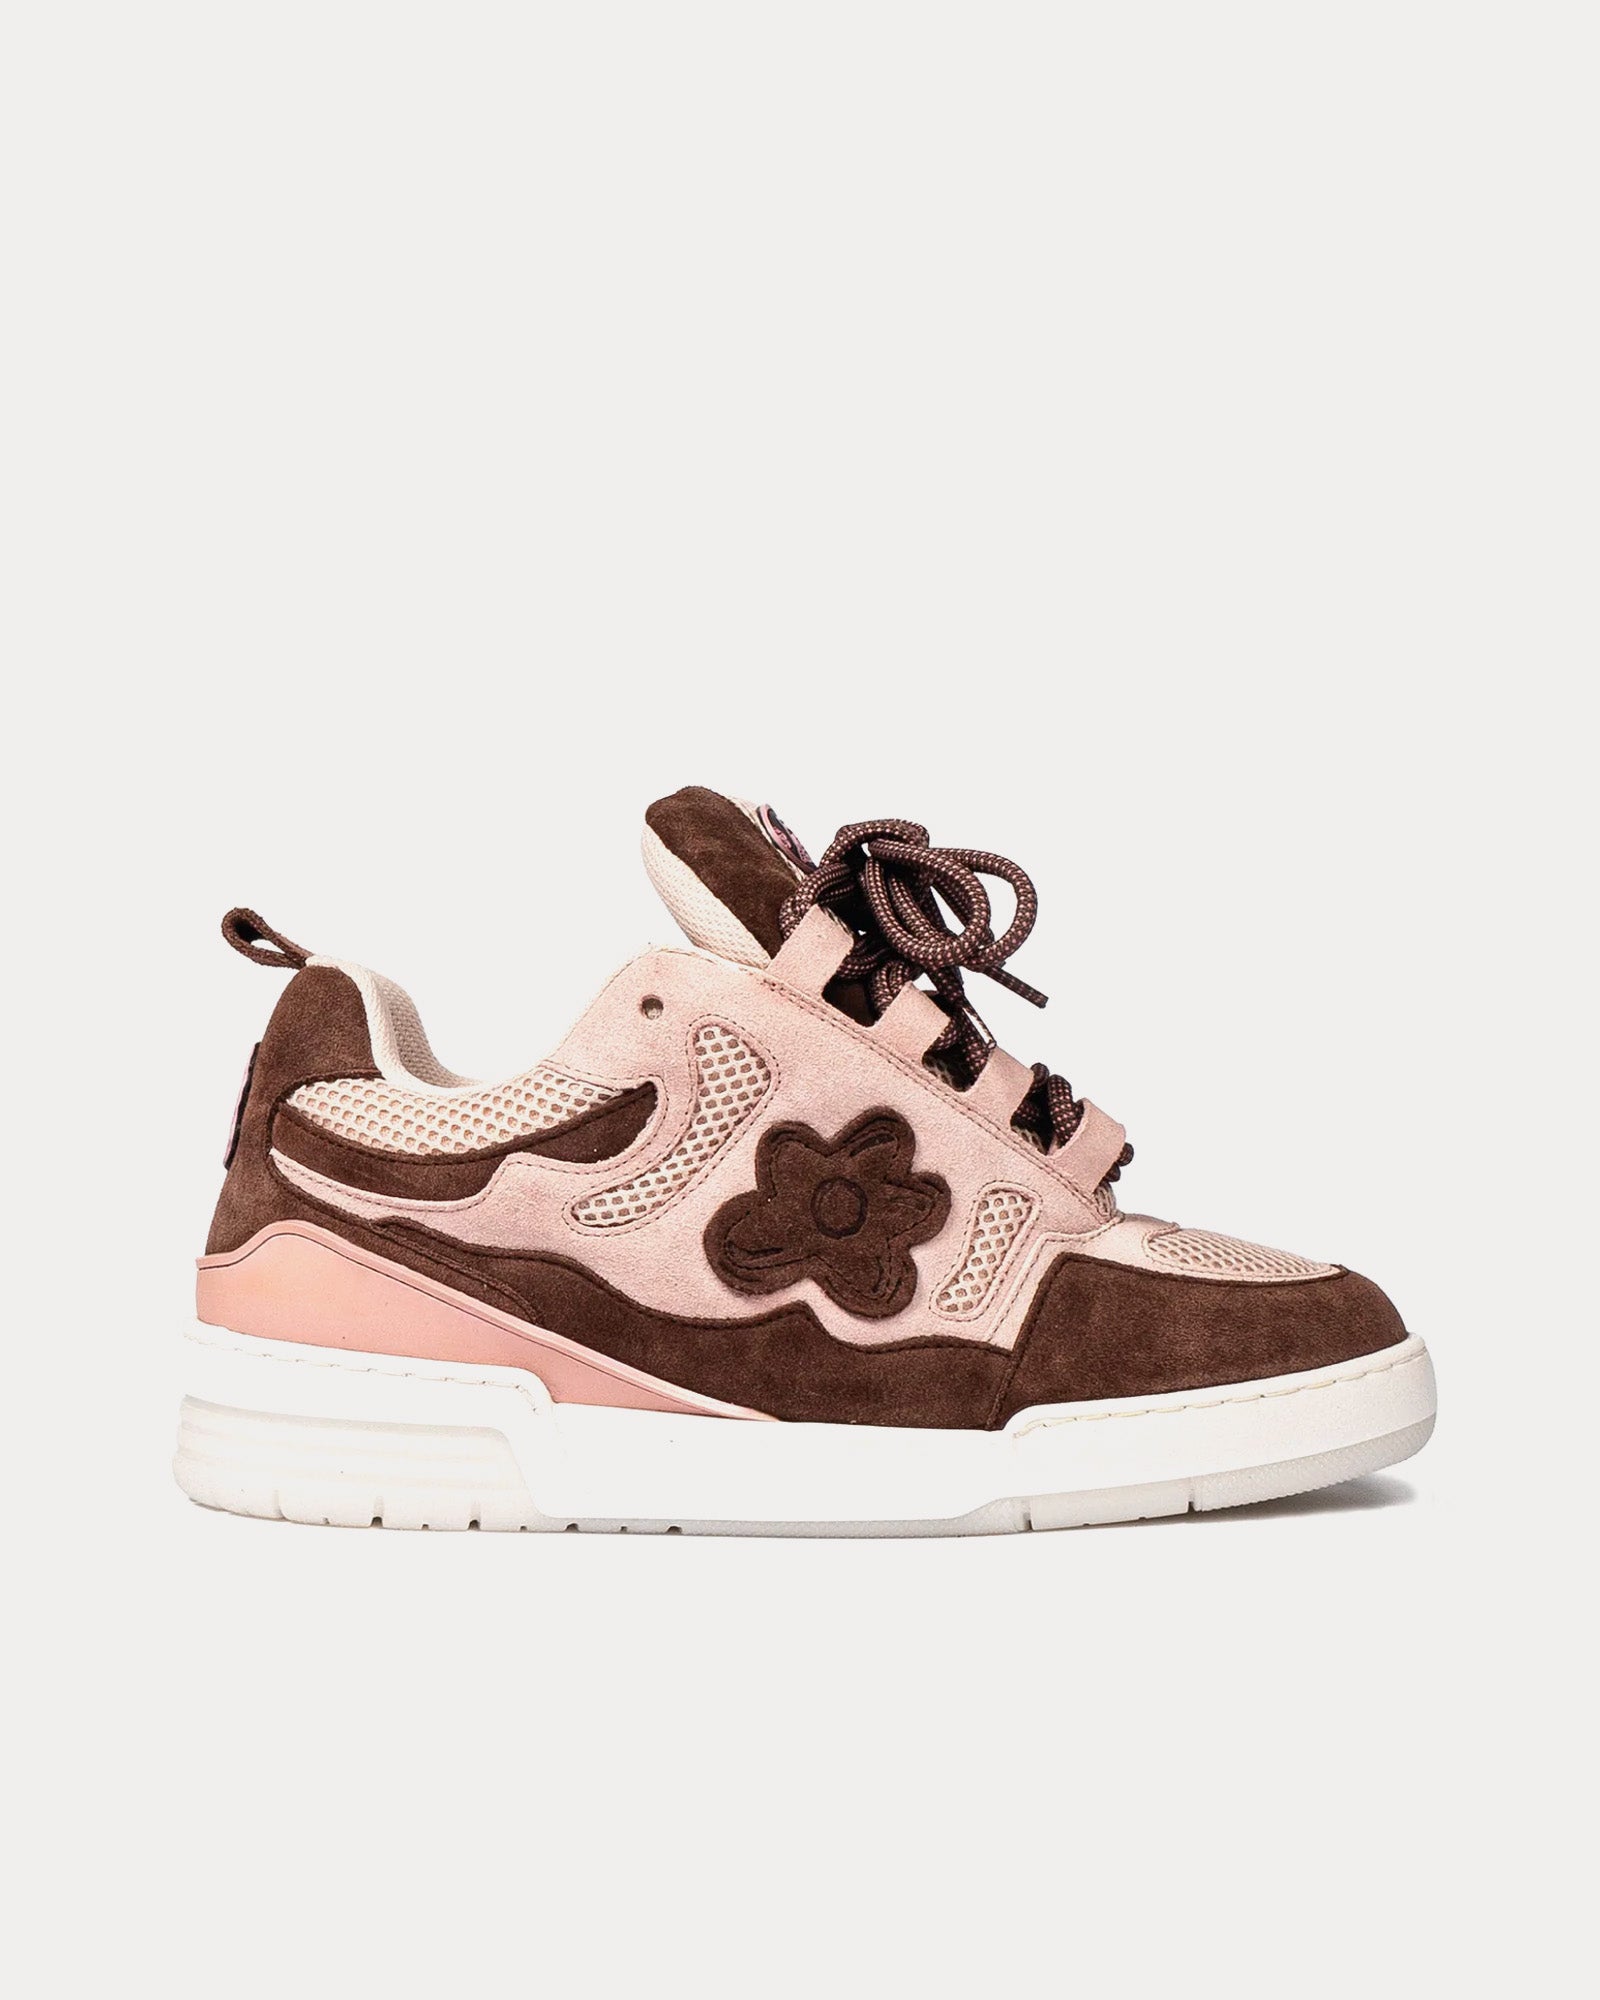 Flower Instincts - The Brown Goblin Pink / Brown Low Top Sneakers